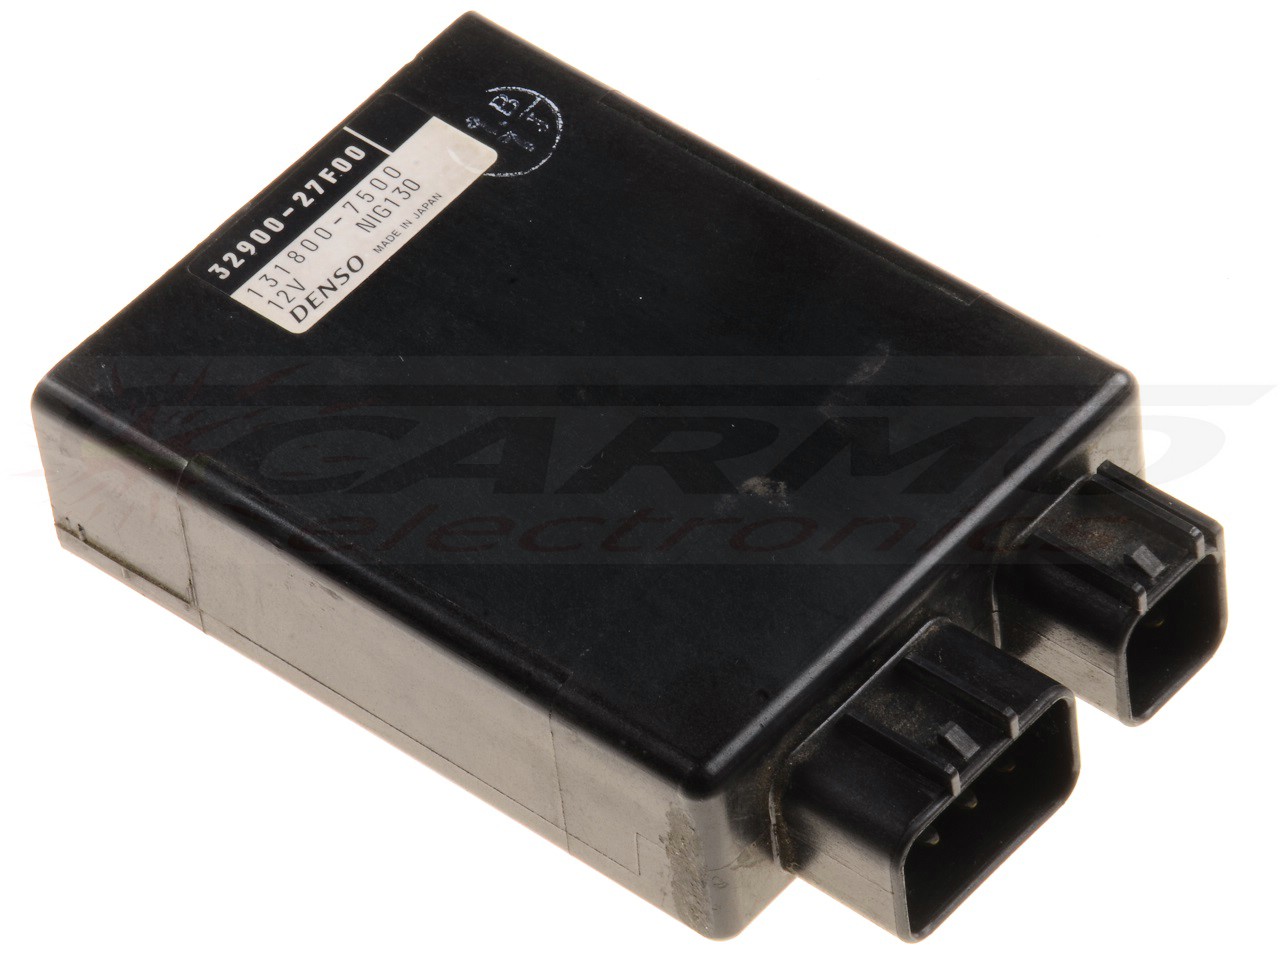 VL250 Intruder TCI CDI dispositif de commande boîte noire (32900-27F00, 131800-7500, DENSO)